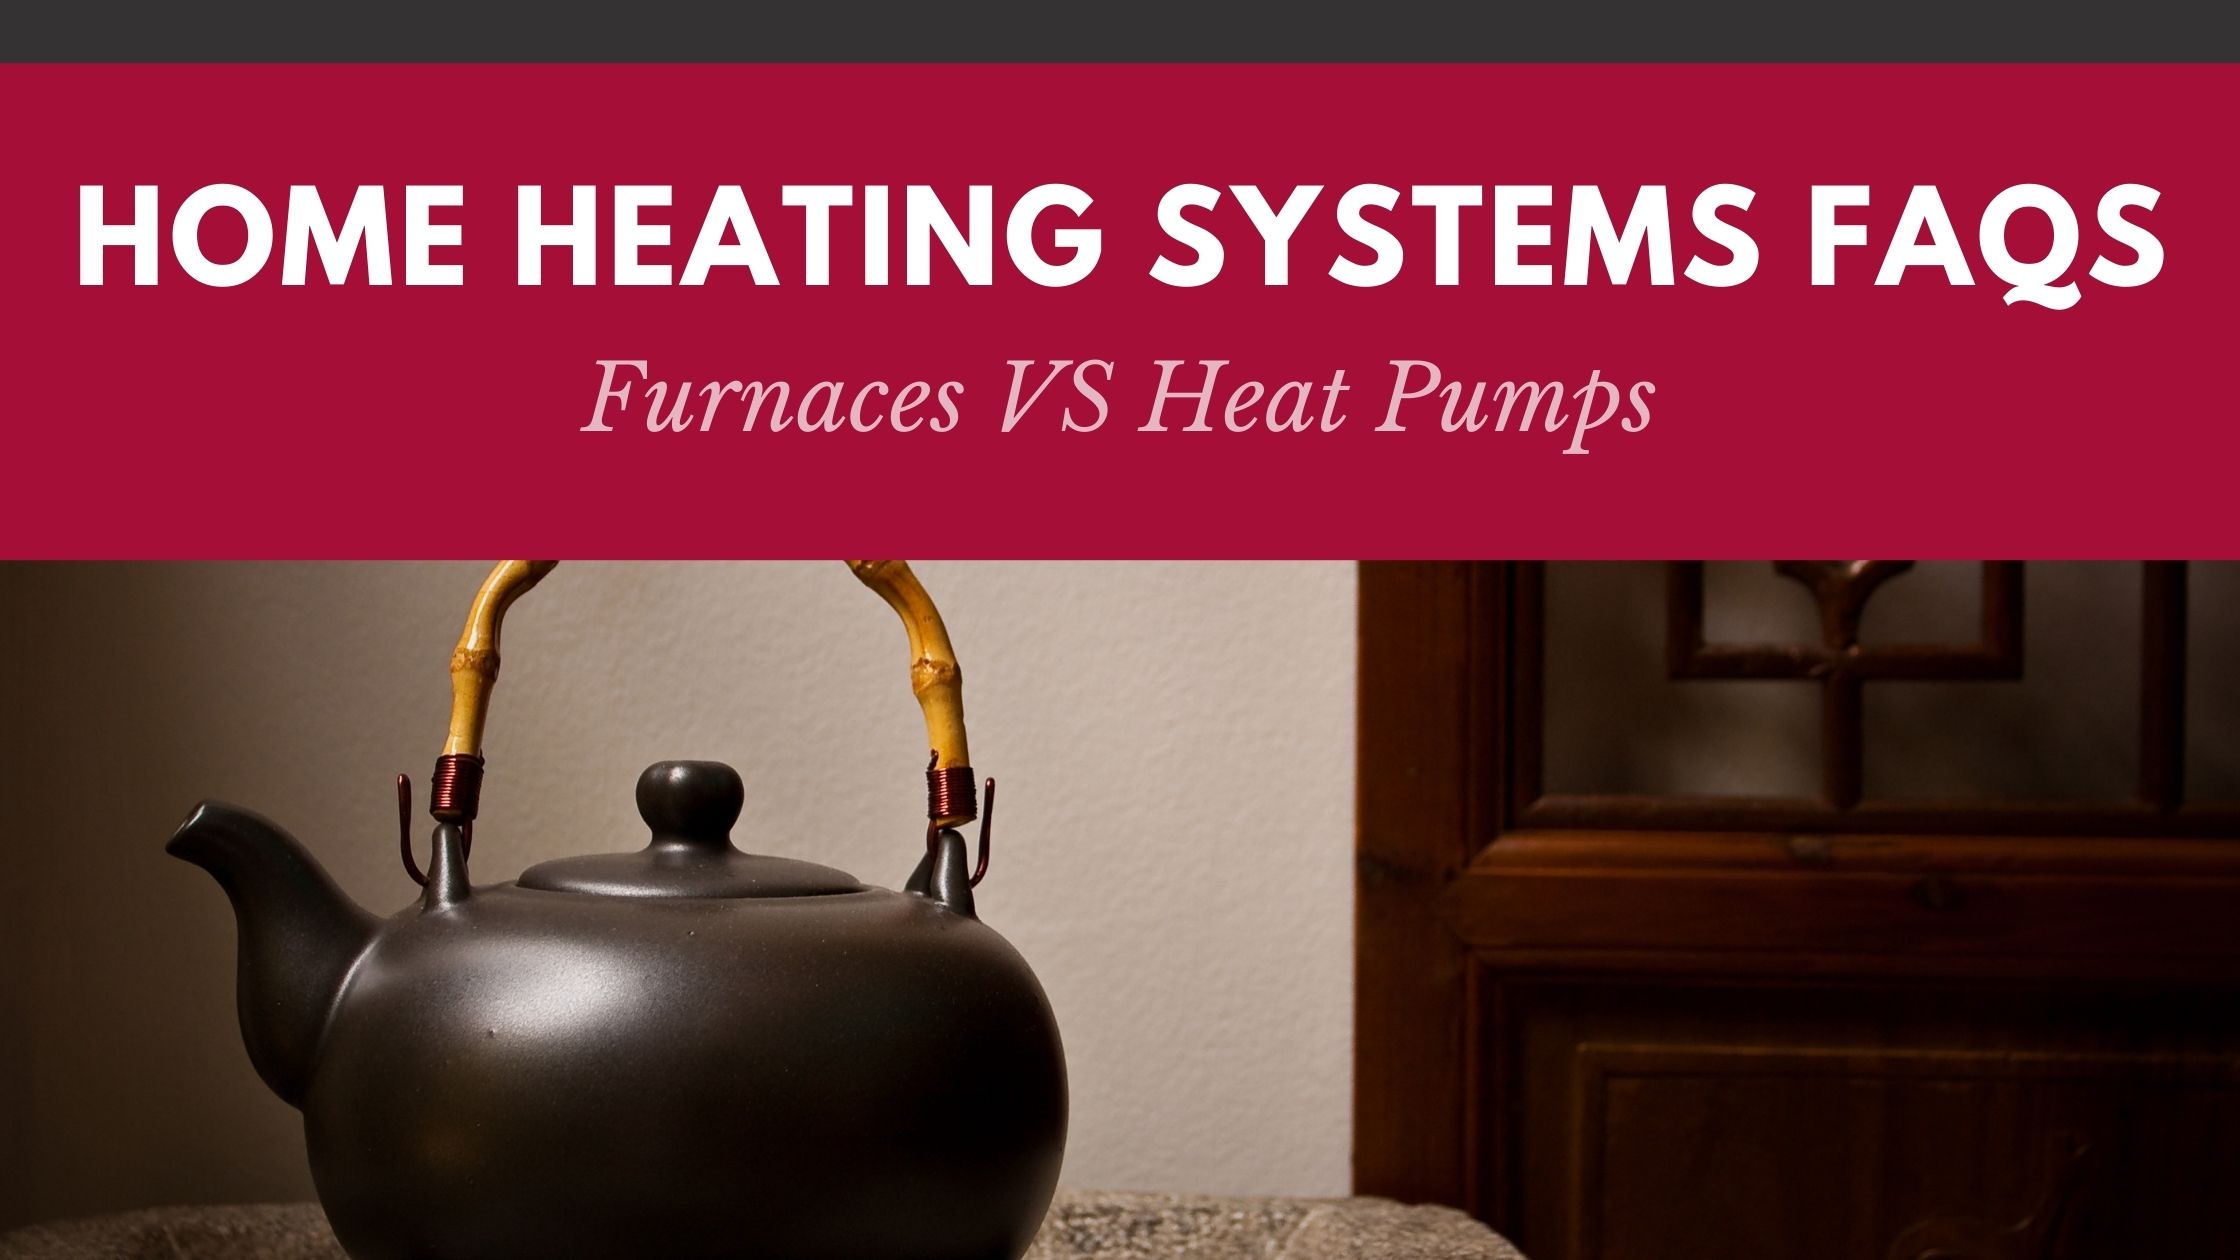 Furnaces Vs Heat Pumps